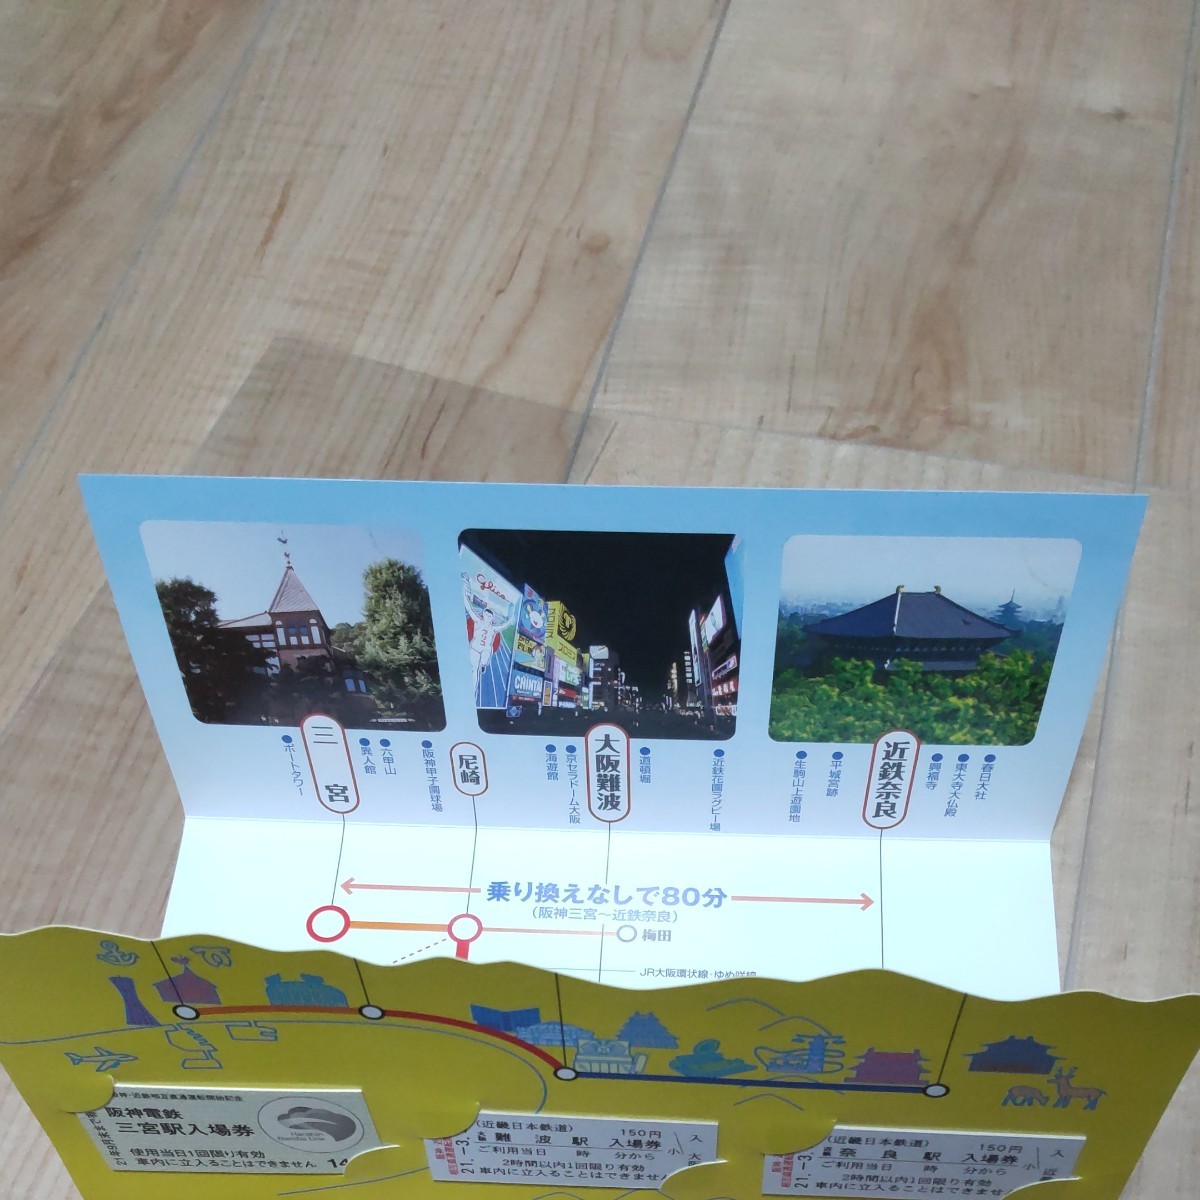 阪神電鉄 近畿日本鉄道 阪神なんば線相互直通運転開始記念入場券セット